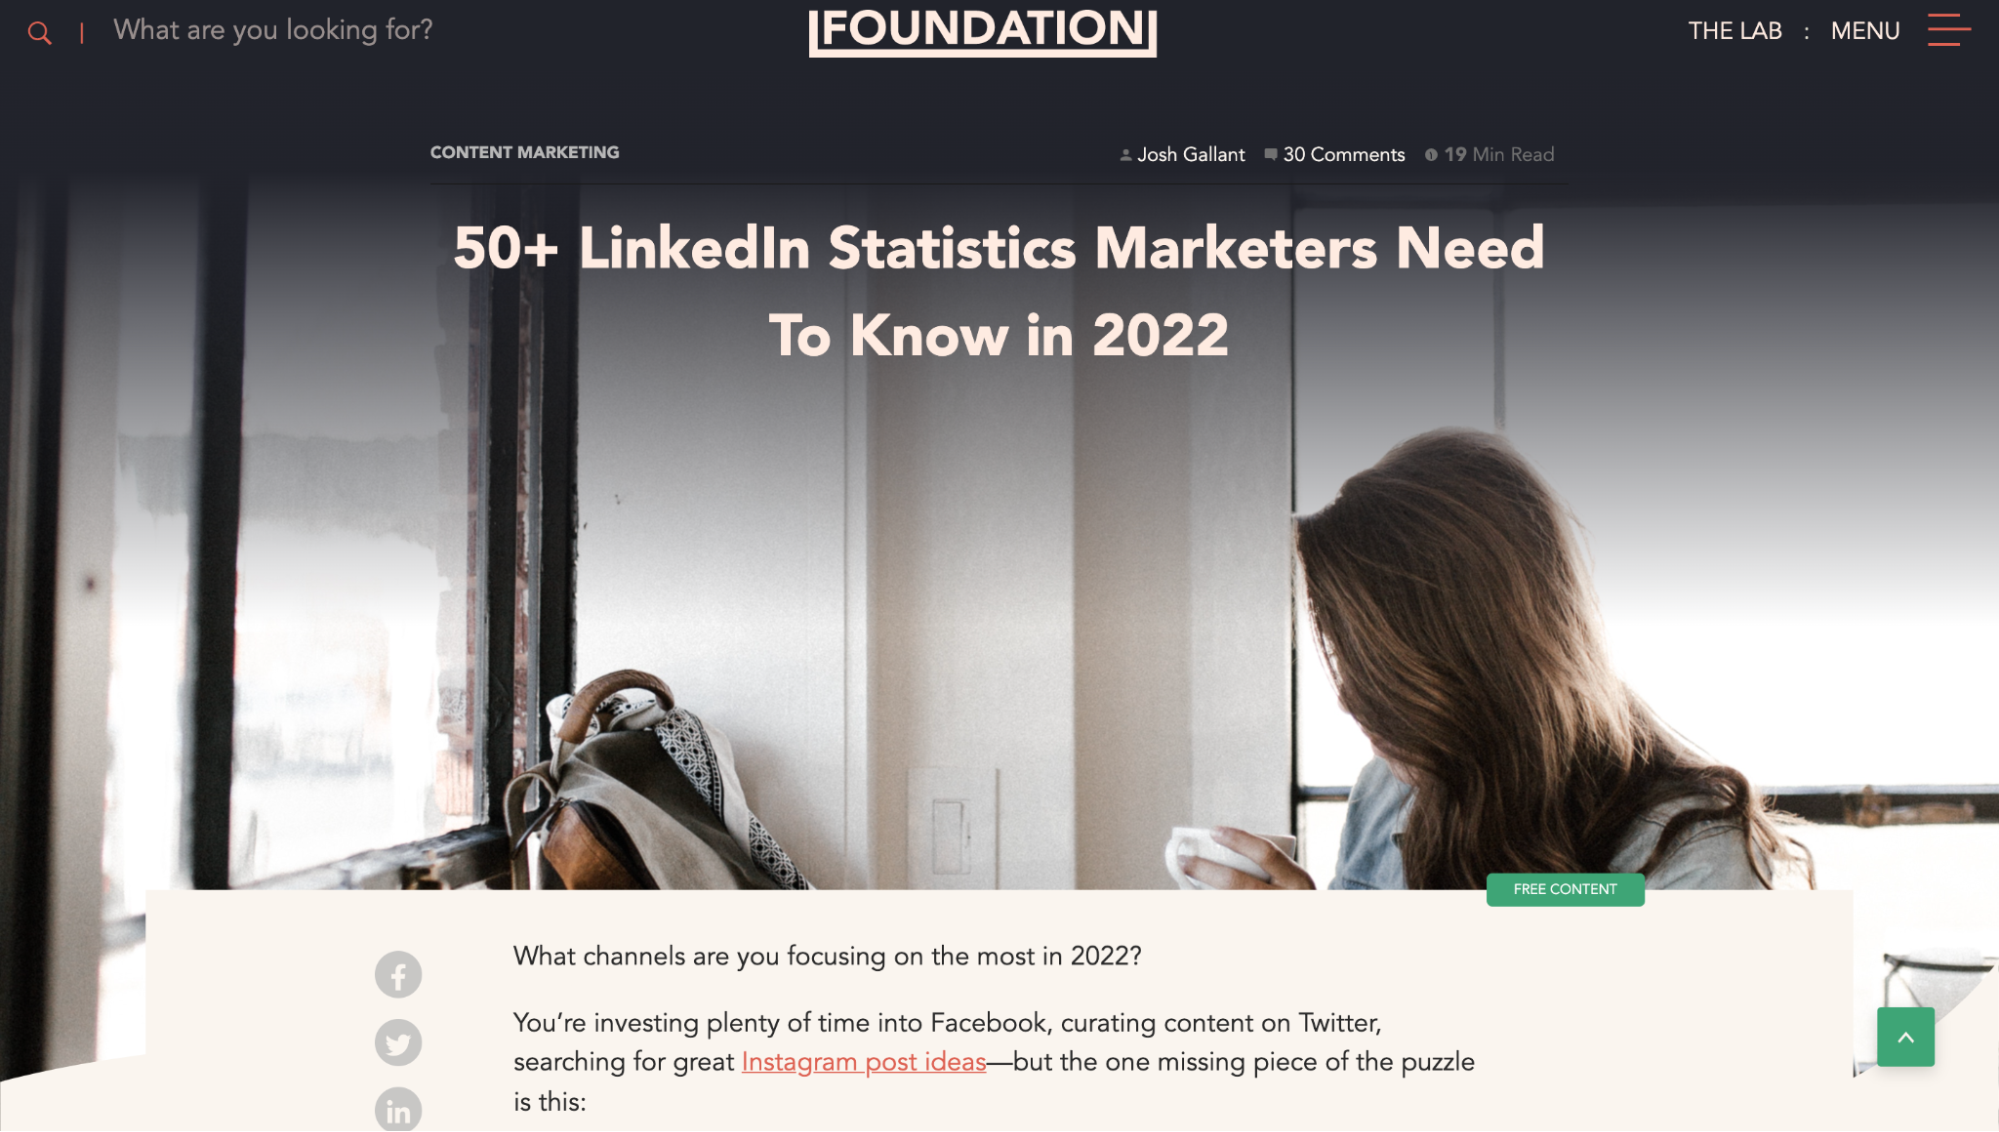 Foundation blog post about 50+ LinkedIn Statistics